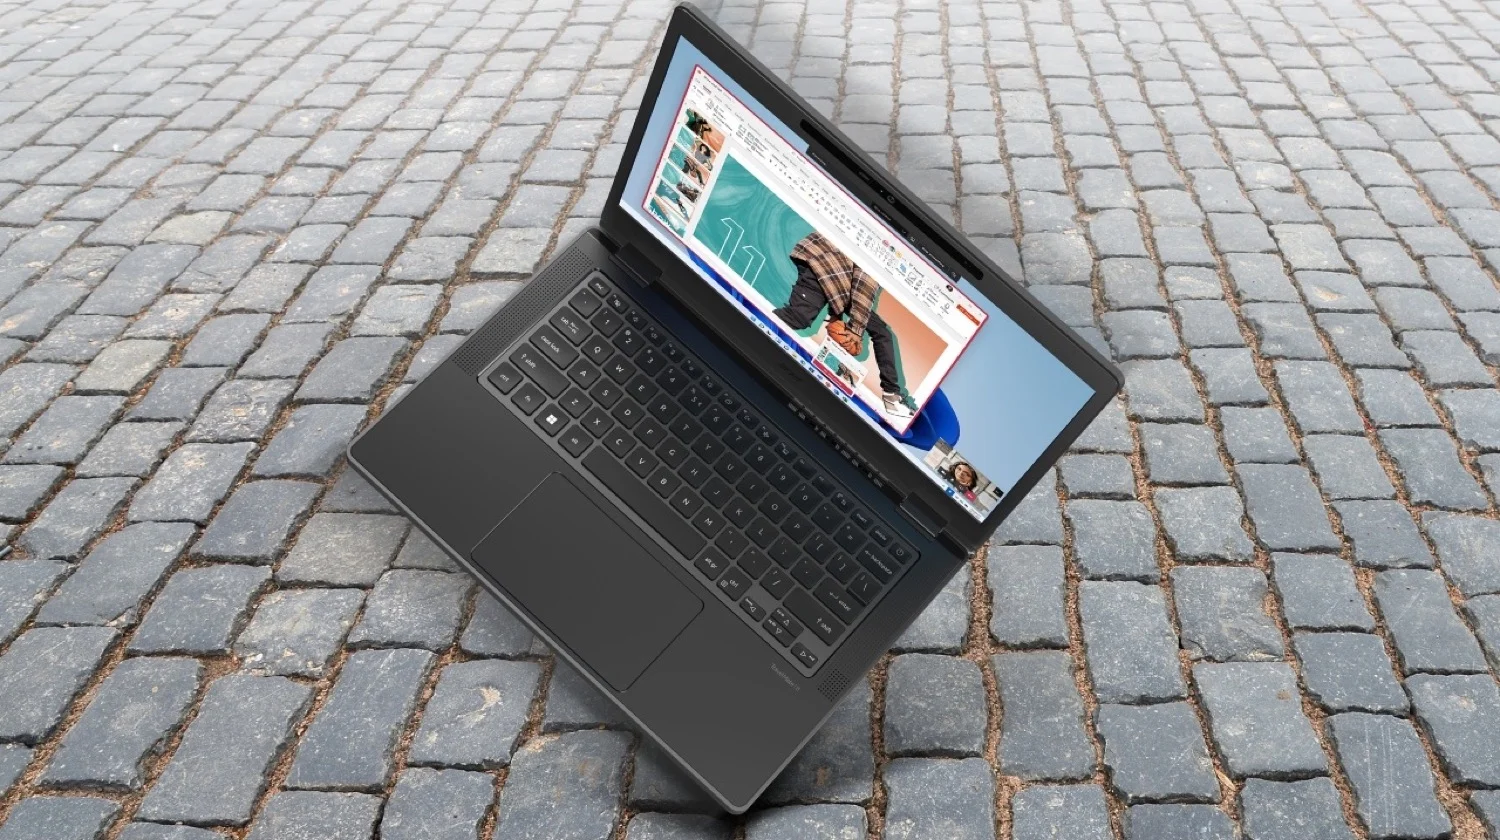 Laptops Acer TravelMate reducen la fatiga visual